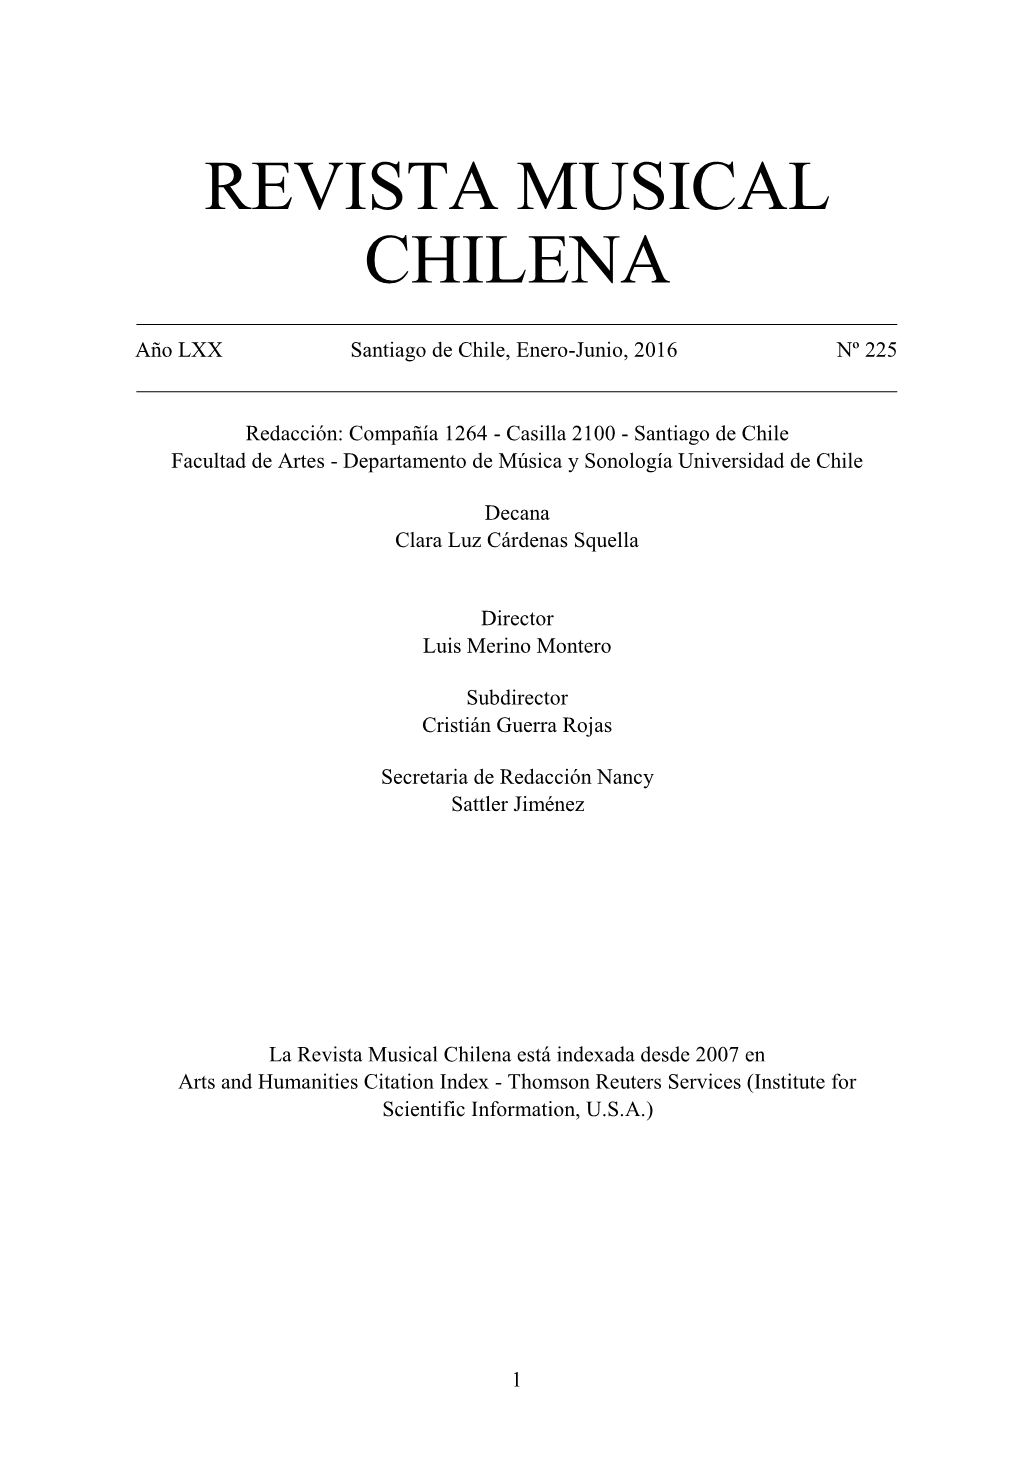 Revista Musical Chilena Está Indexada Desde 2007 En Arts and Humanities Citation Index - Thomson Reuters Services (Institute for Scientific Information, U.S.A.)